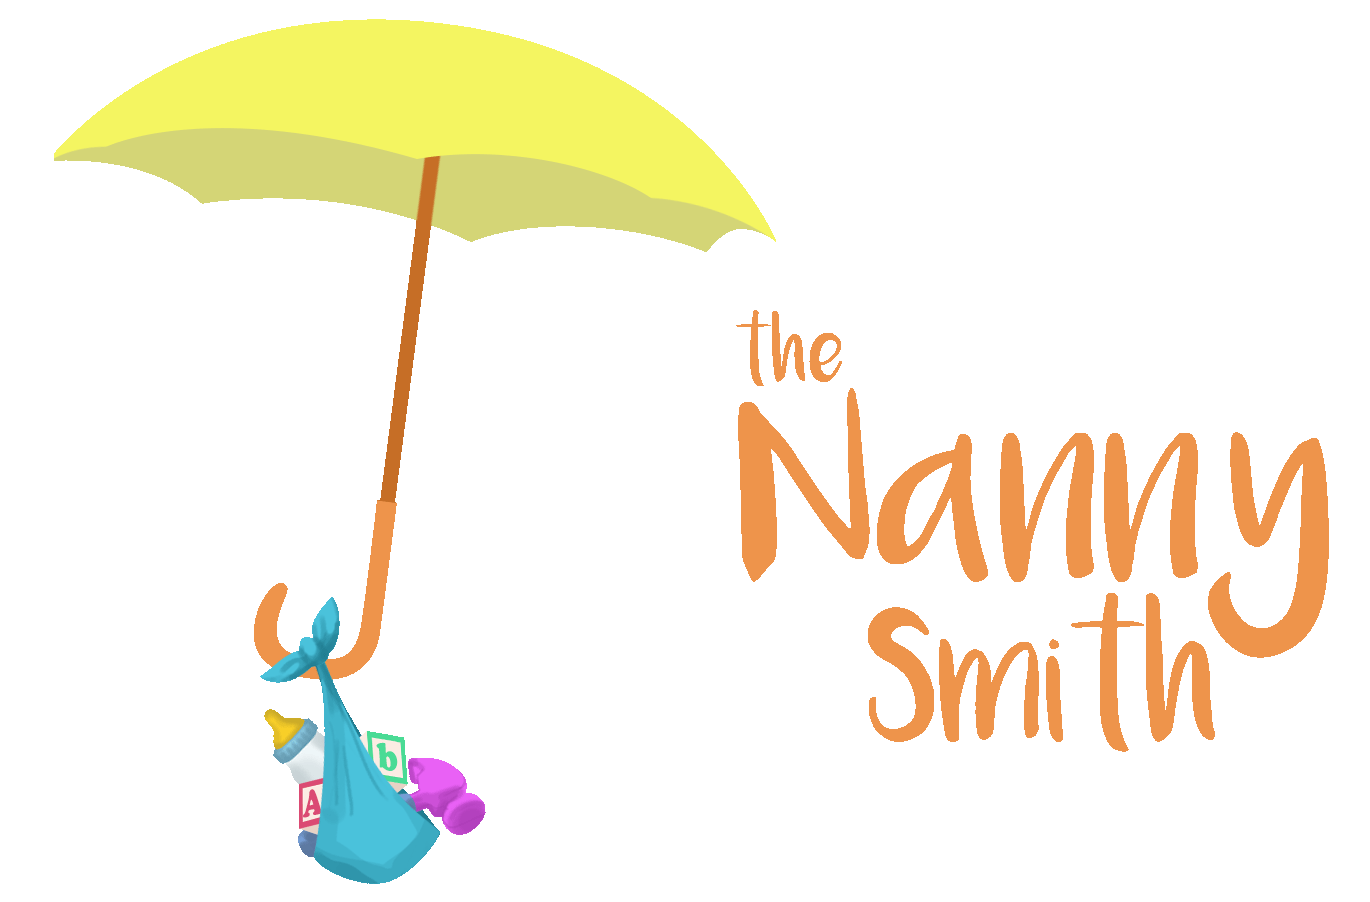 The Nanny Smith -- A Dependable Nanny Agency 